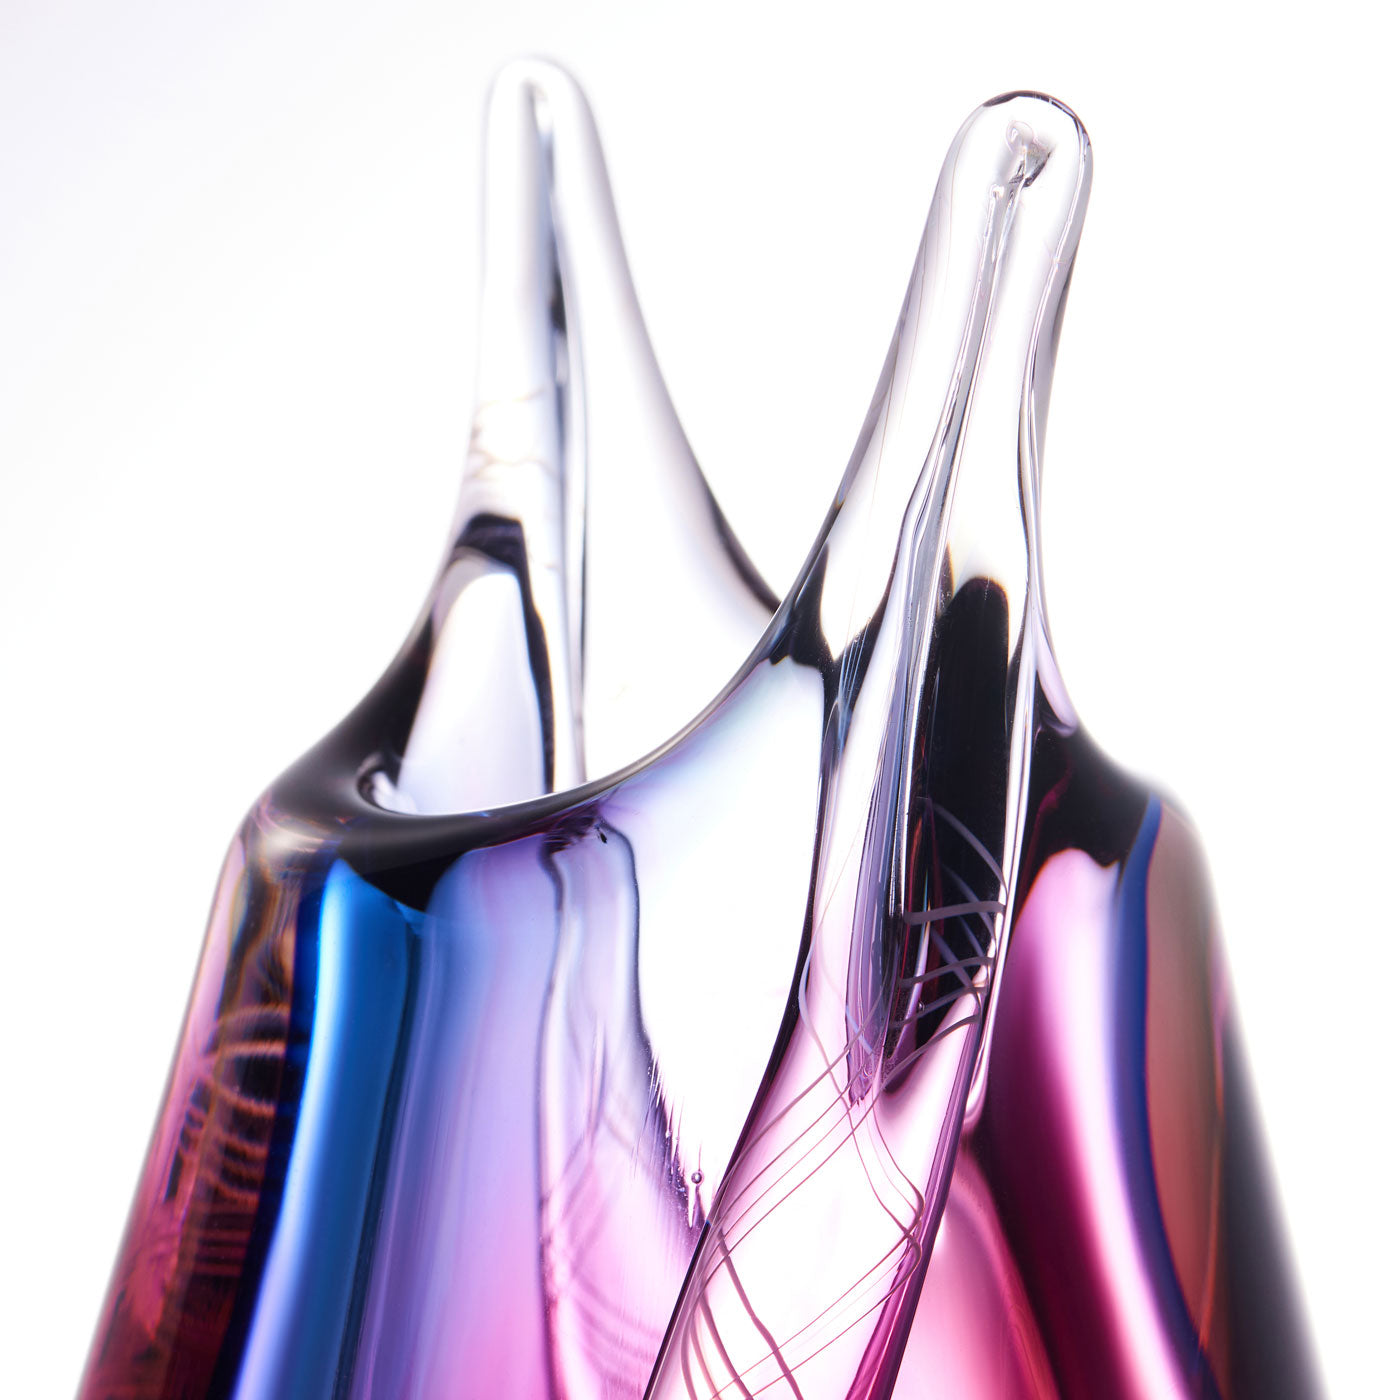 Hand Blown Sommerso Art Glass Teardrop Vase 8-10.5 inch tall